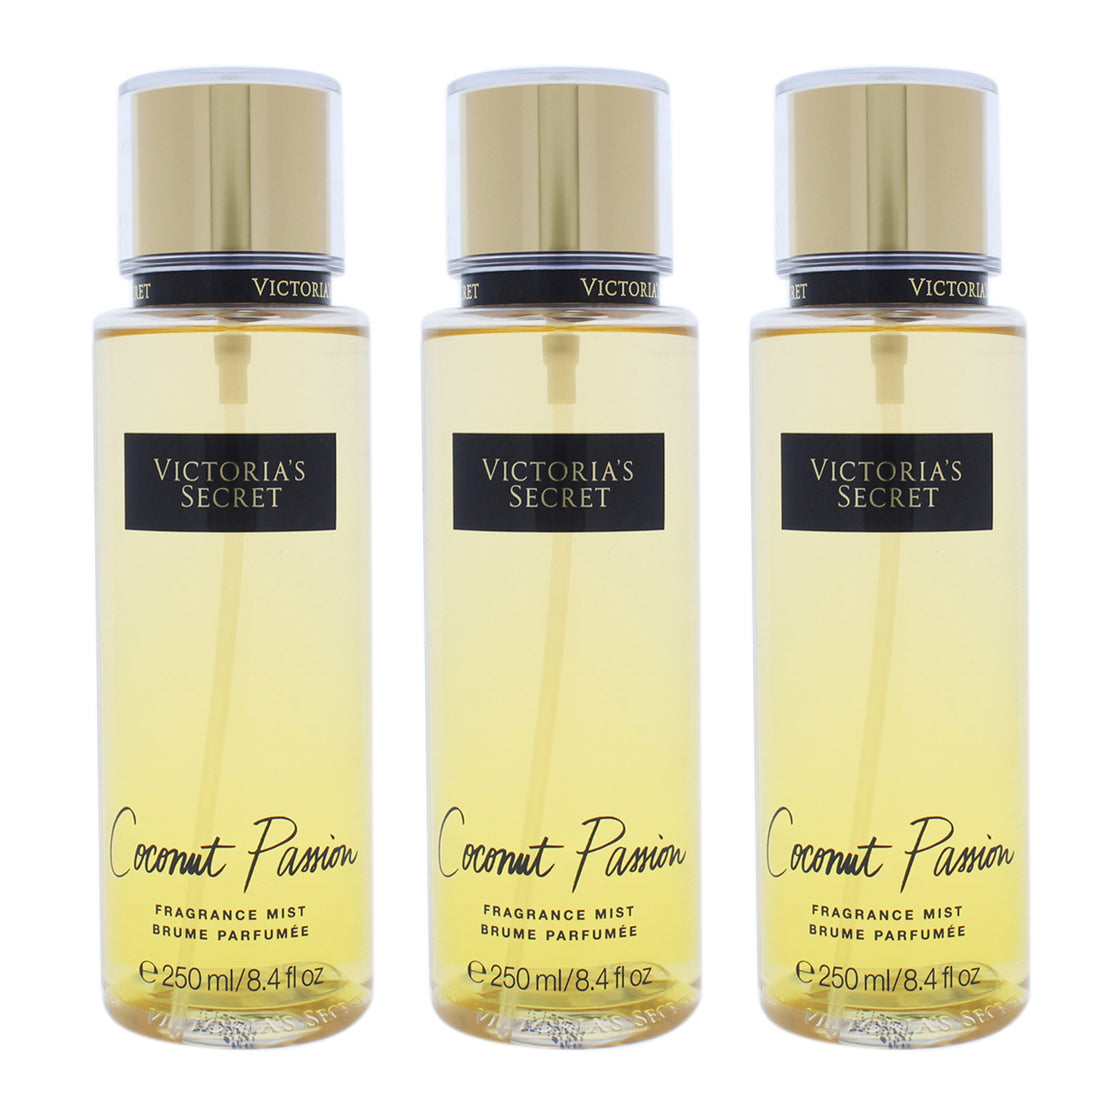 Coconut Passion by Victorias Secret for Women - 8.4 oz Fragrance Mist - Pack of 3